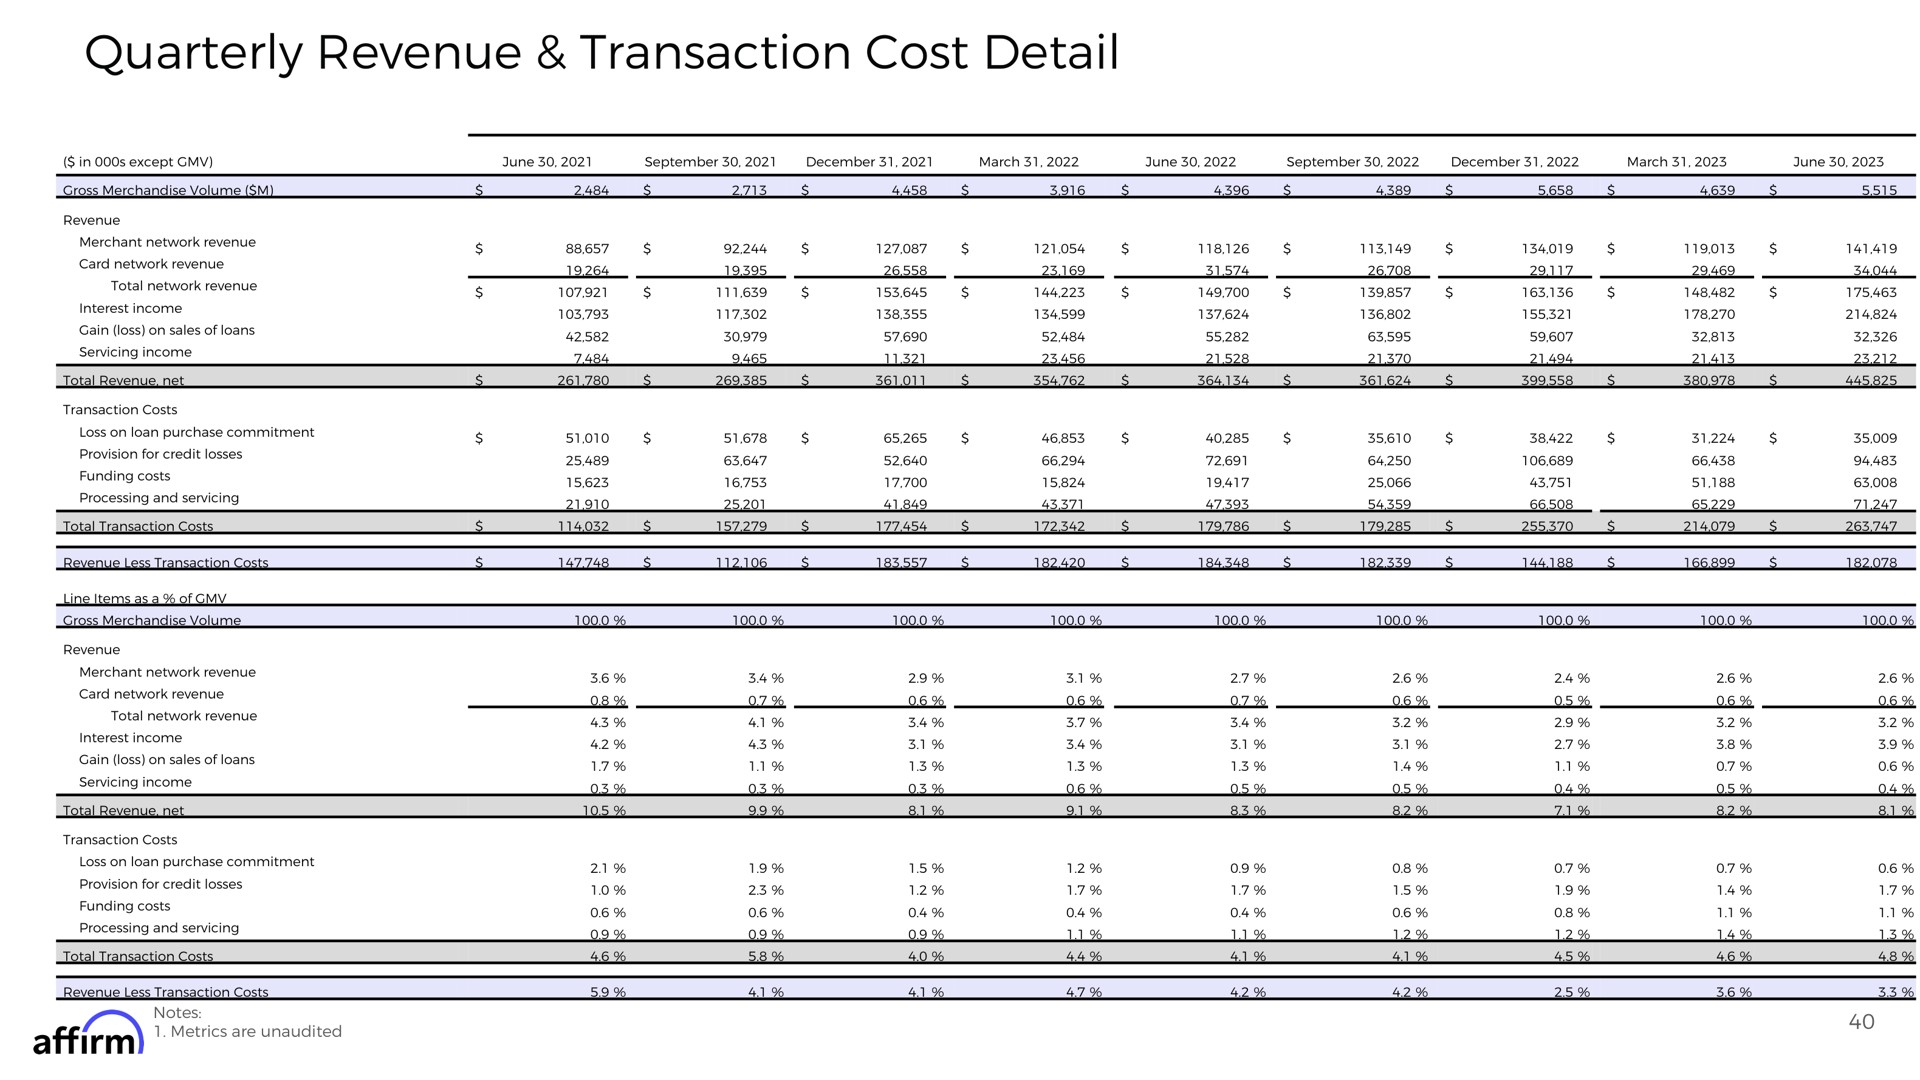 quarterly revenue transaction cost detail affirm | Affirm